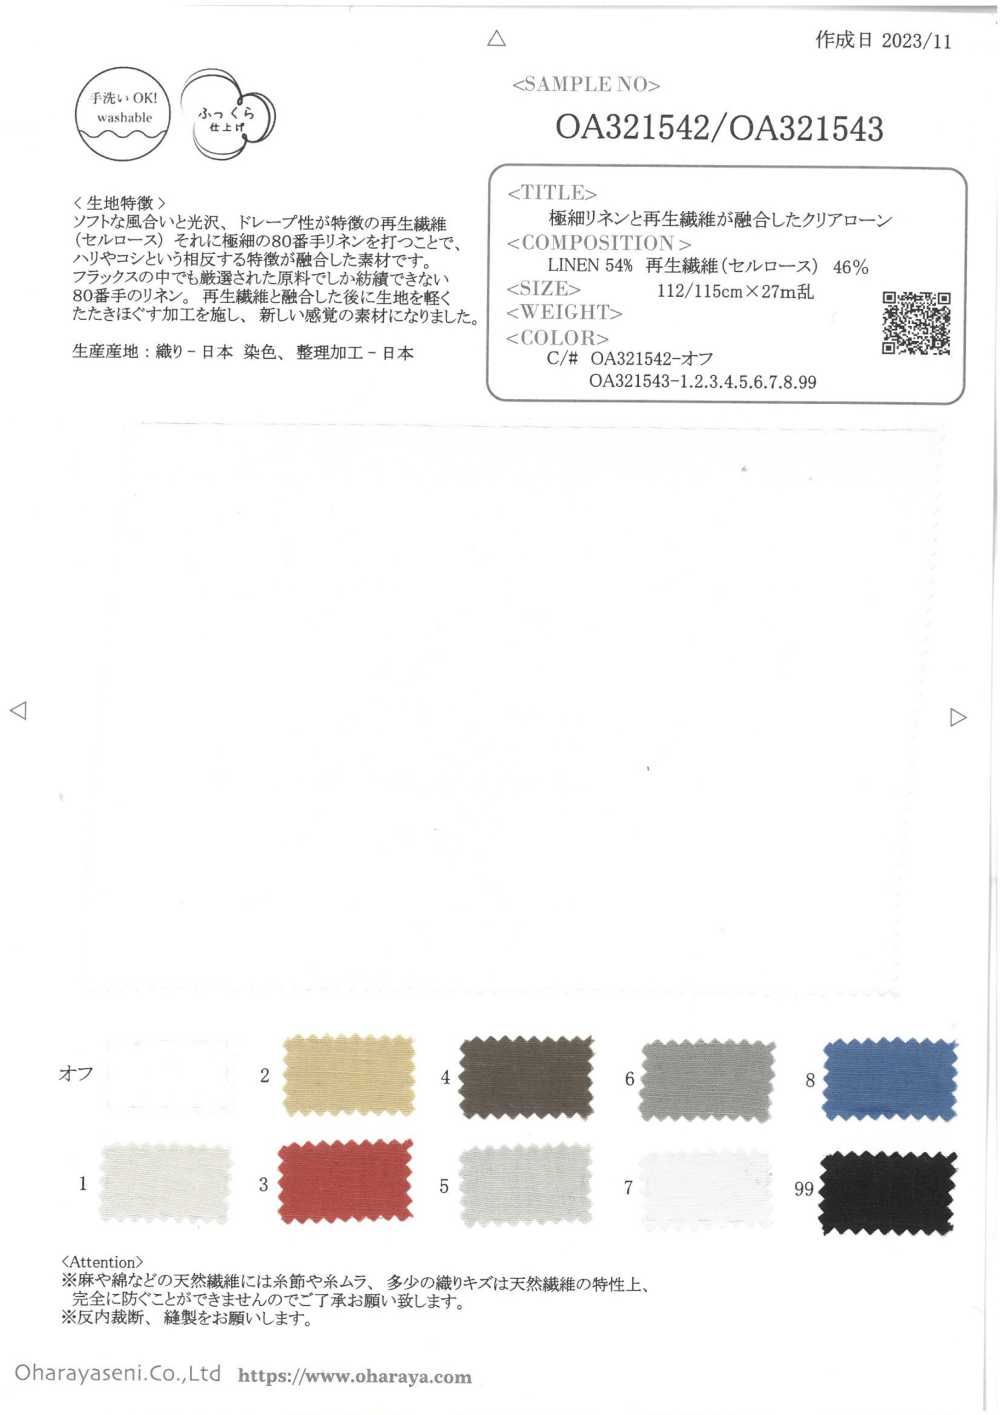 OA321542 Césped Transparente Que Combina Lino Ultrafino Y Fibras Recicladas[Fabrica Textil] Oharayaseni